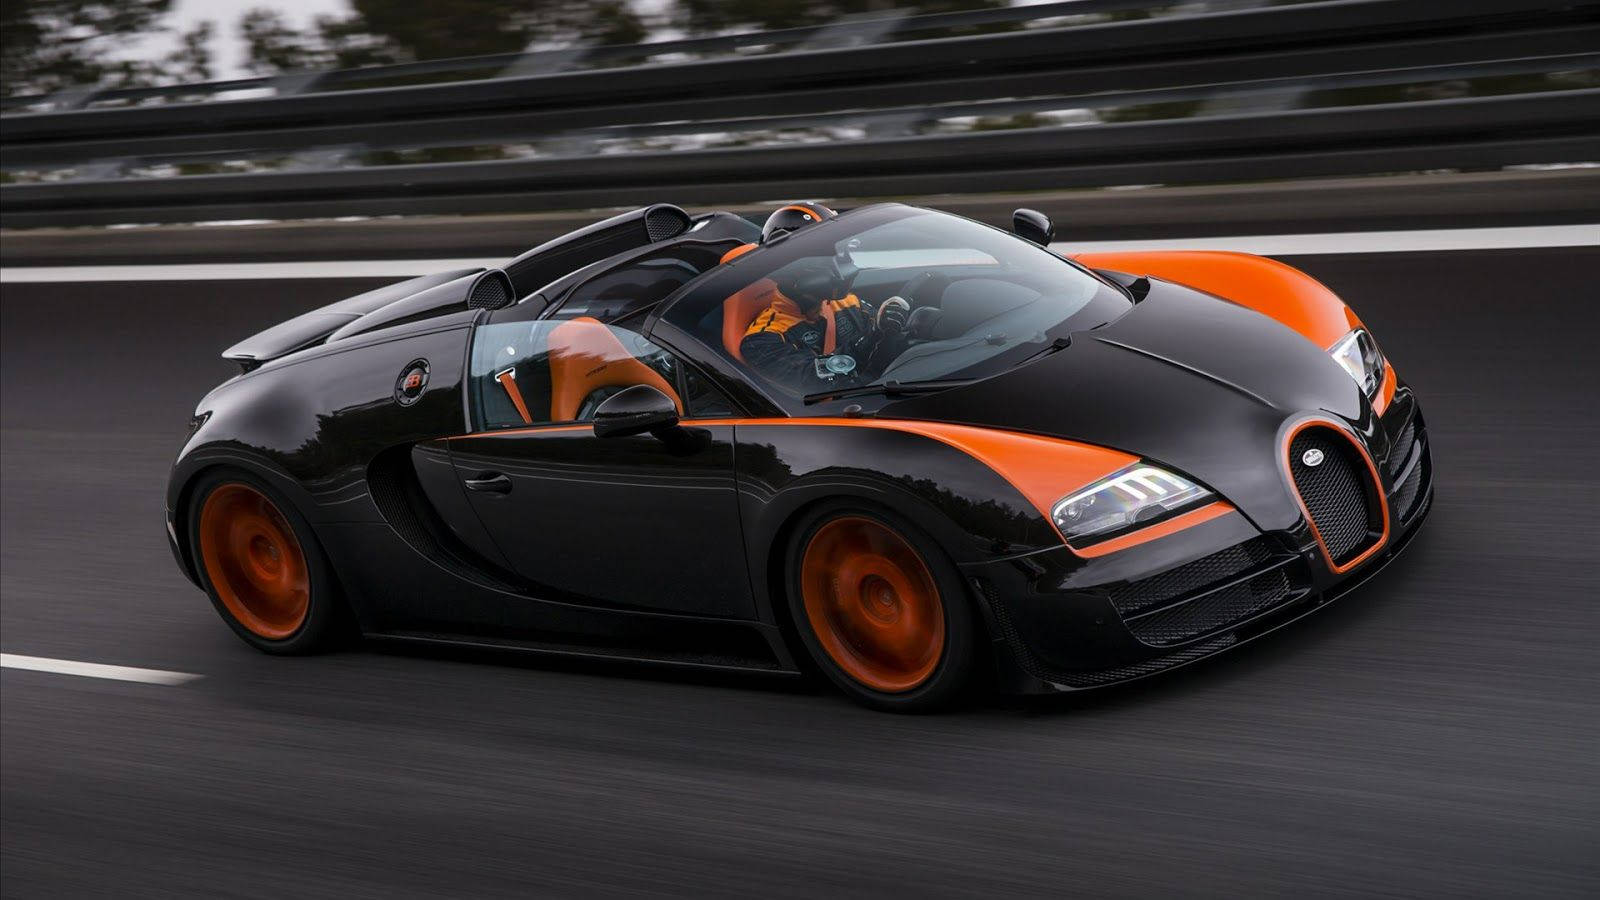 Fast-moving Bugatti Veyron Supercar Background